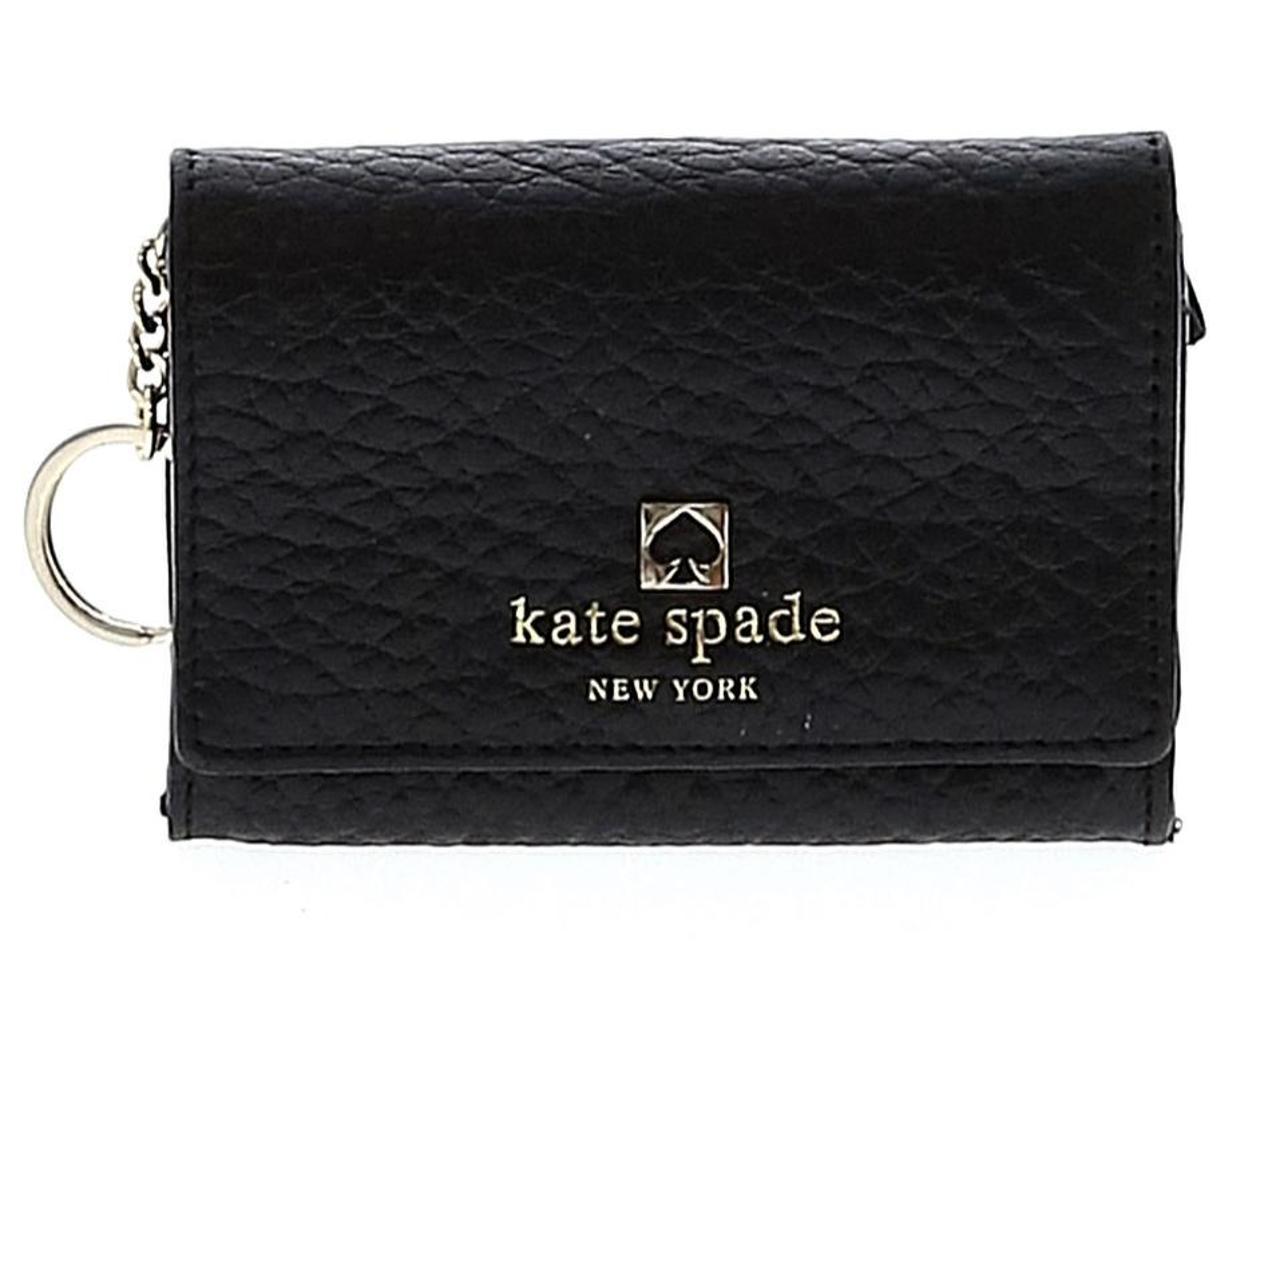 kate spade | Accessories | Disney X Kate Spade New York Minnie Mouse Coin  Purse Black White Polka Dot | Poshmark